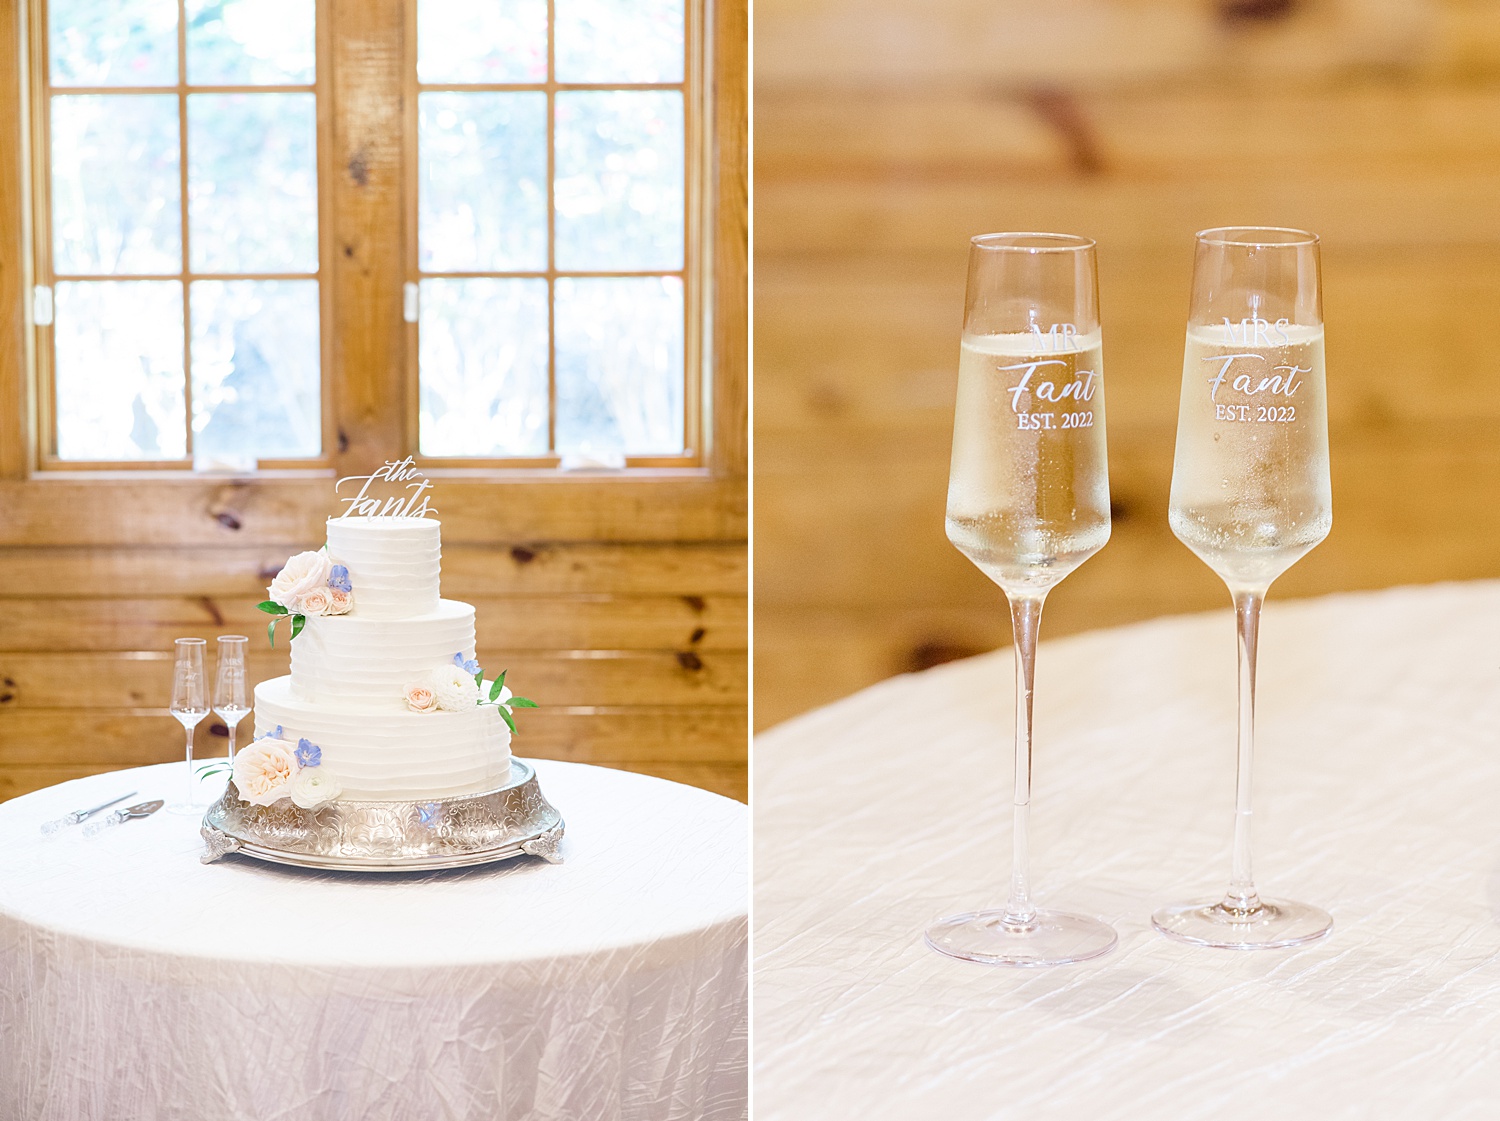 wedding cake and champagne glasses from Elegant Windwood Equestrian Wedding 